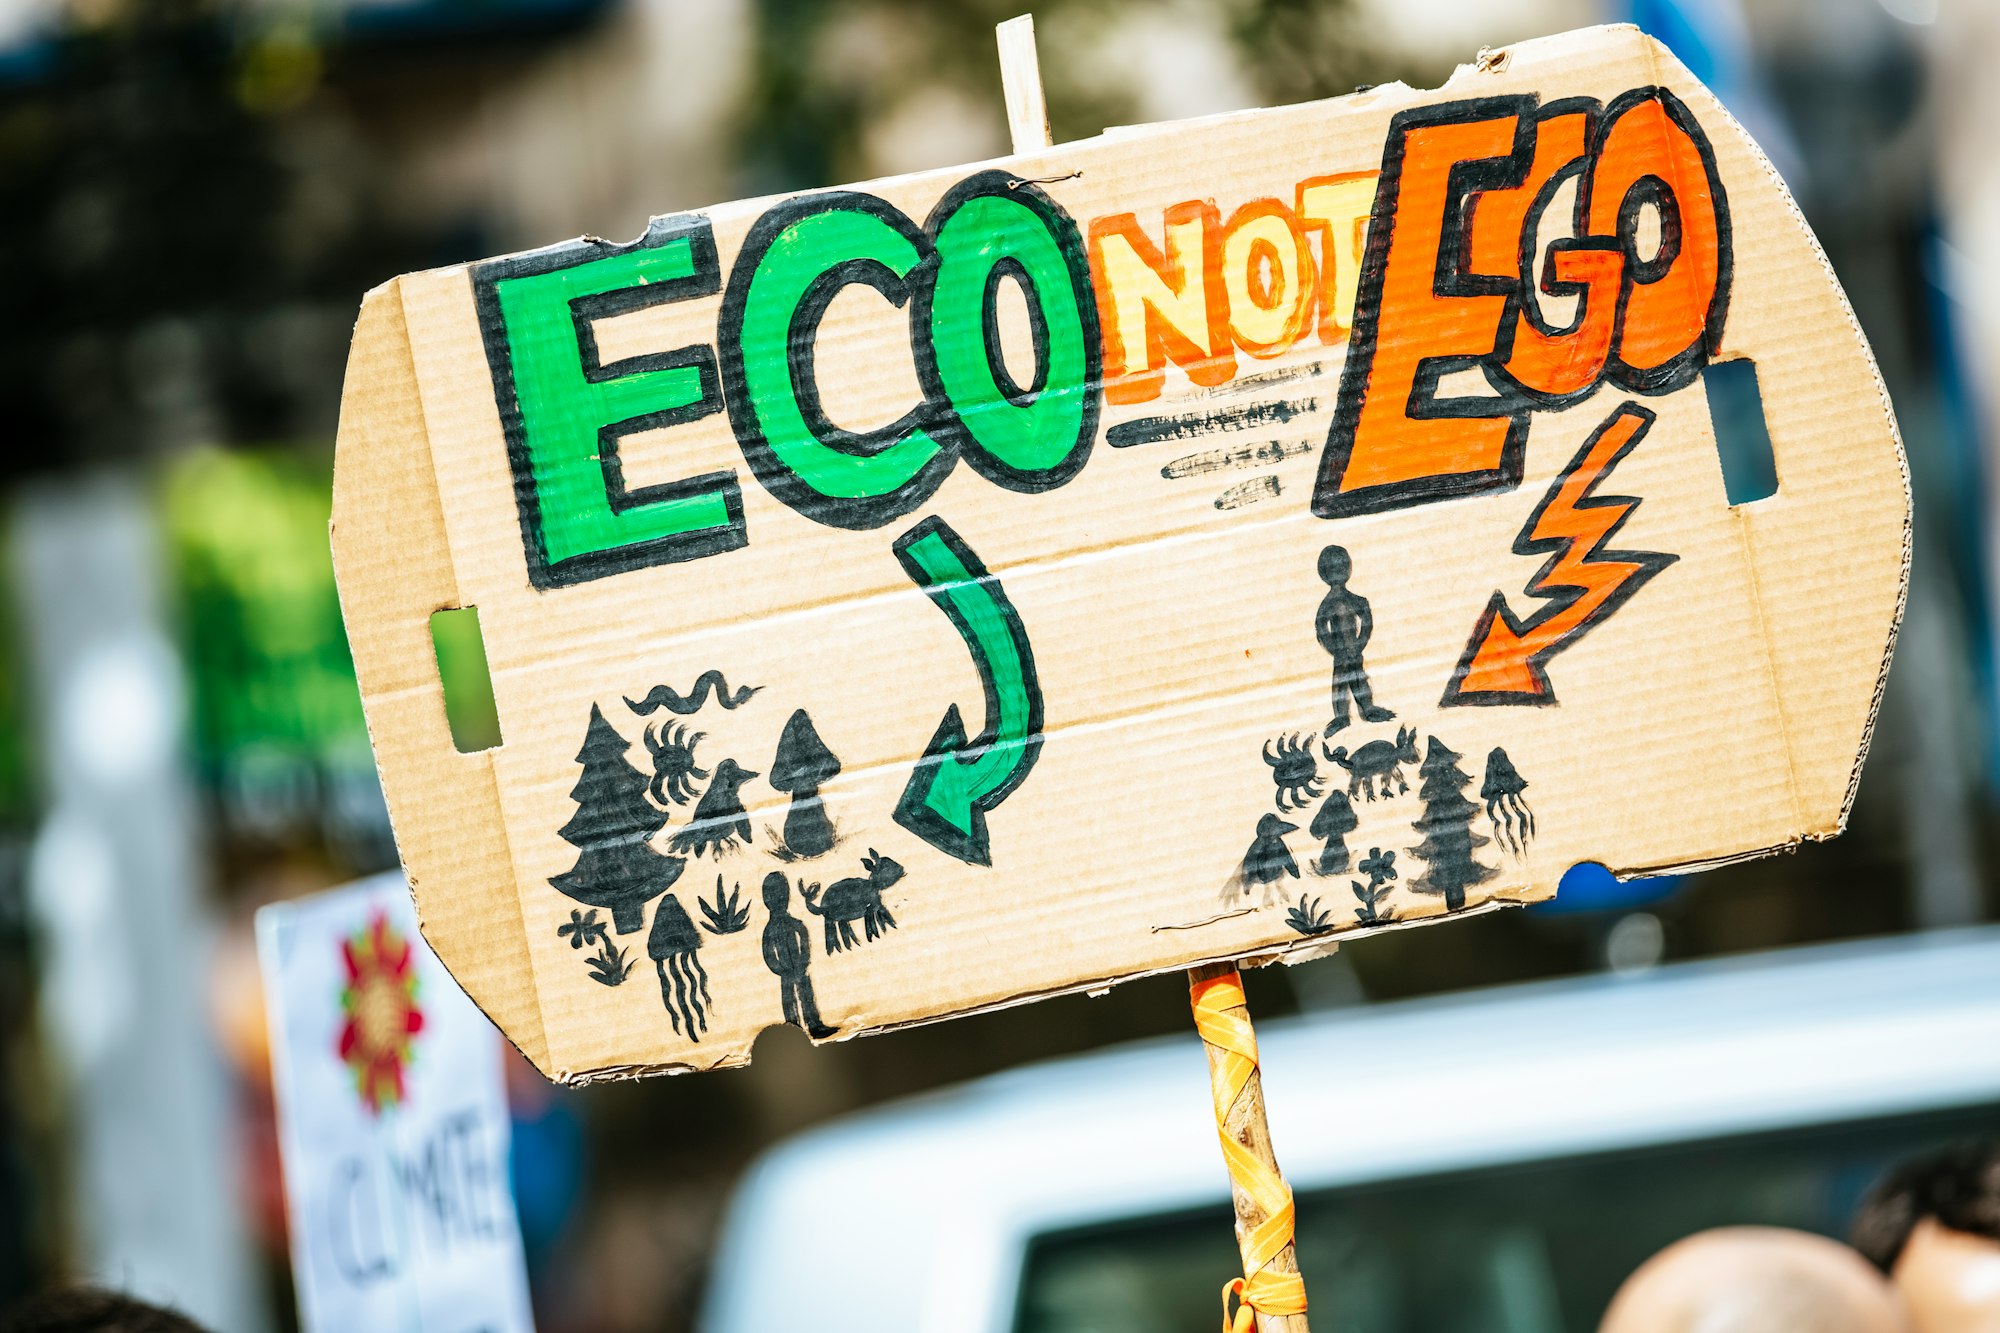 ECO NOT EGO. Global climate change strike - No Planet B - 09-20-2019